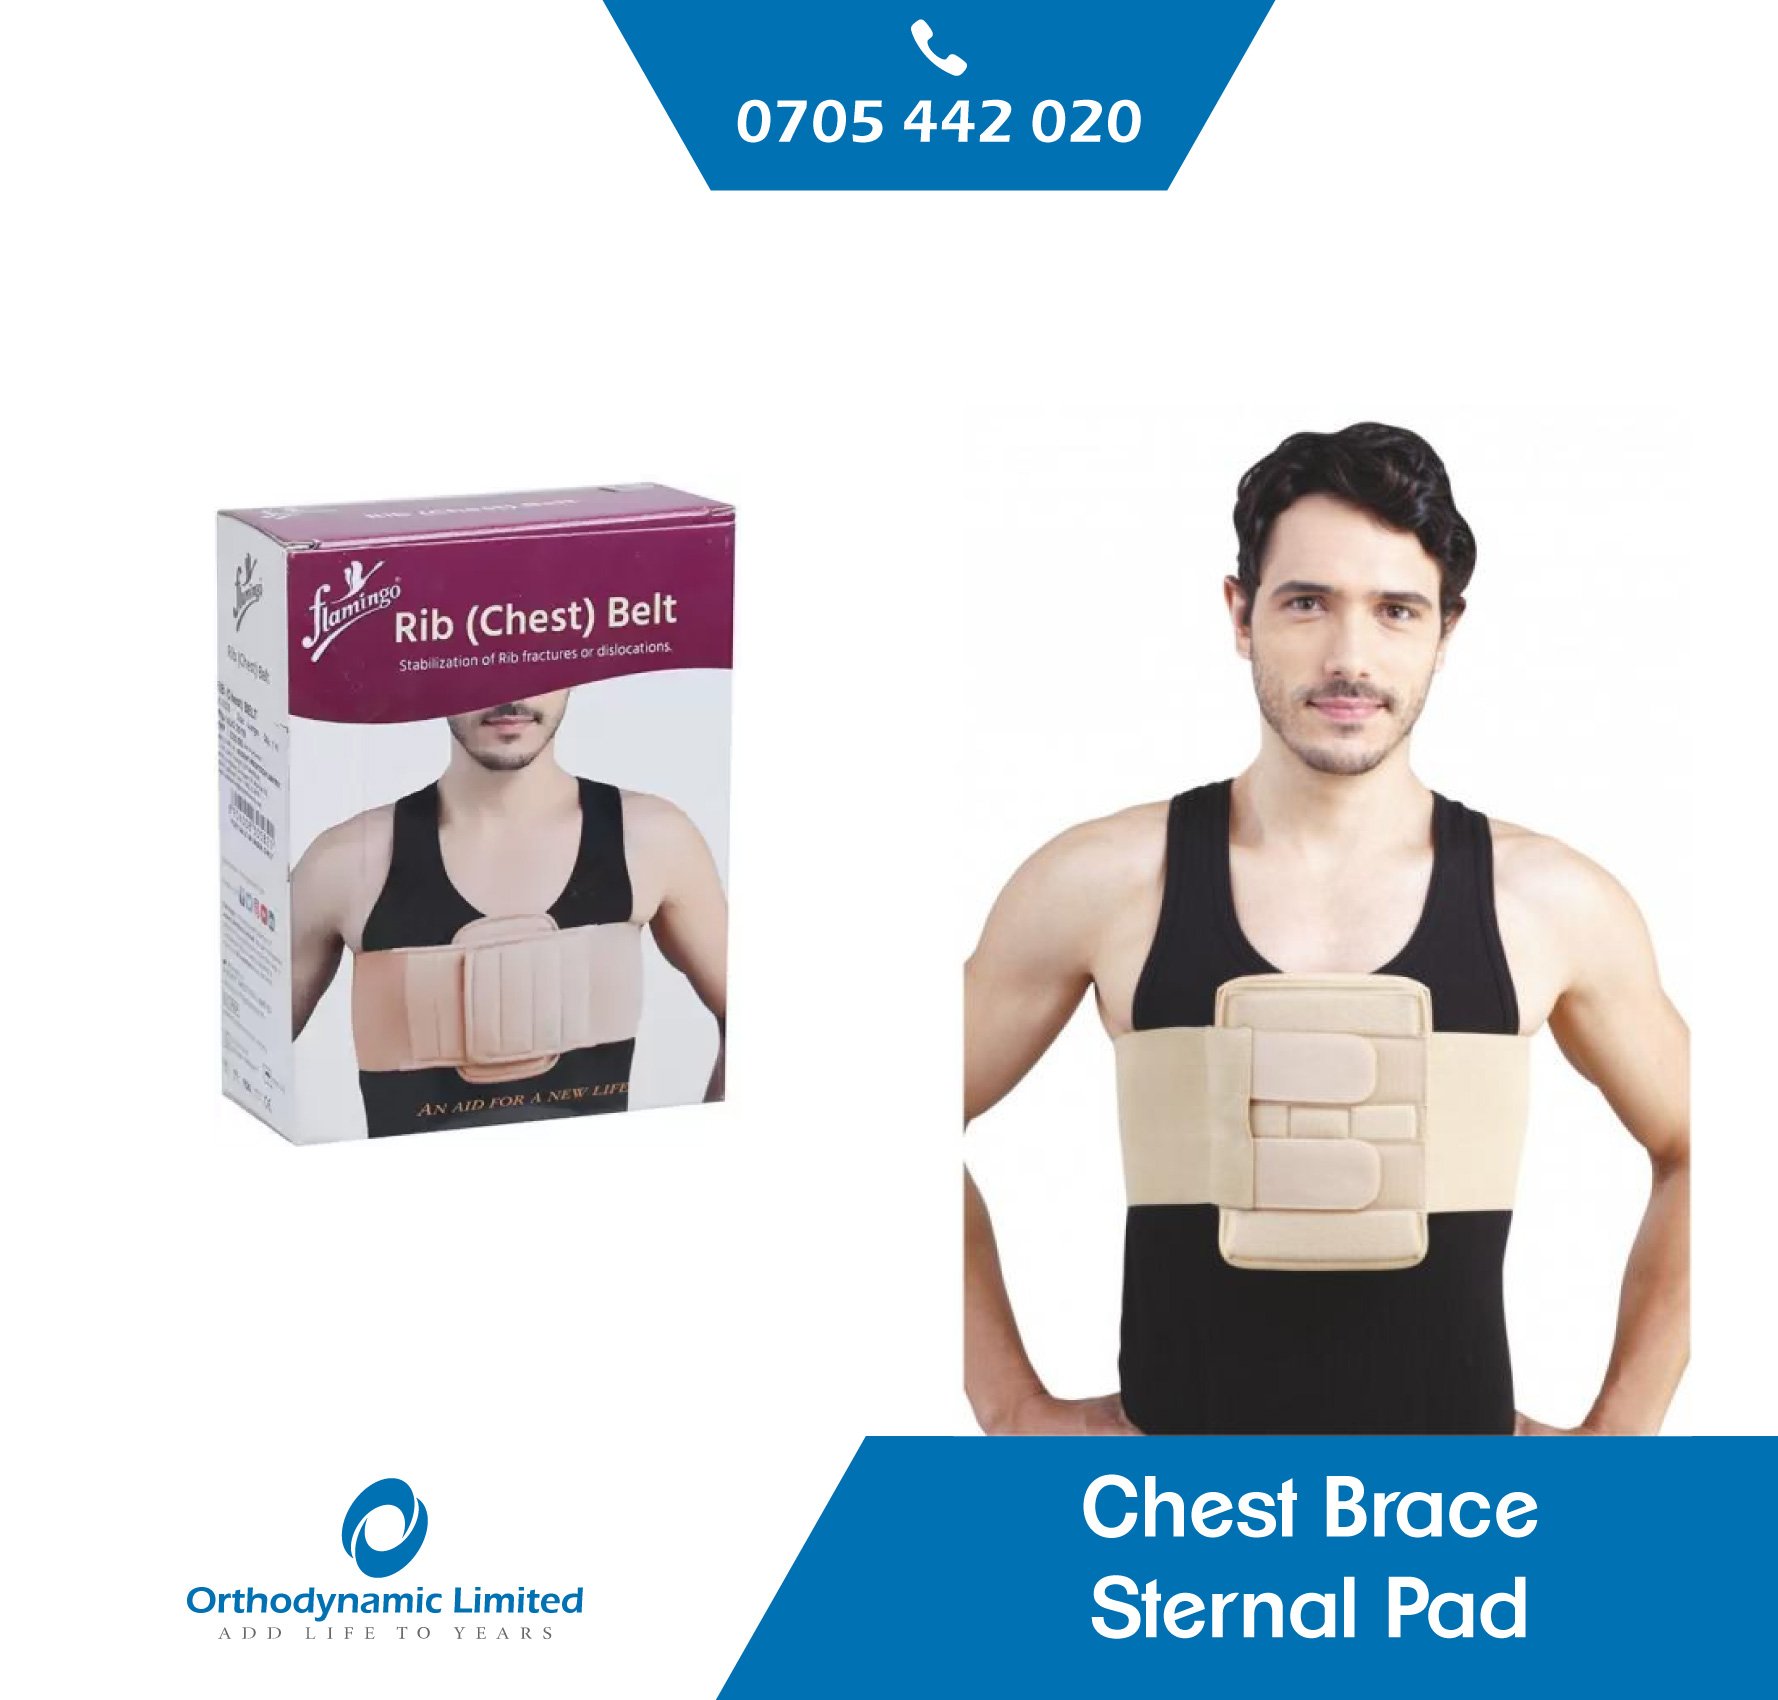 Chest Brace Sternal Pad - Available At Orthodynamic Limited Nairobi Kenya